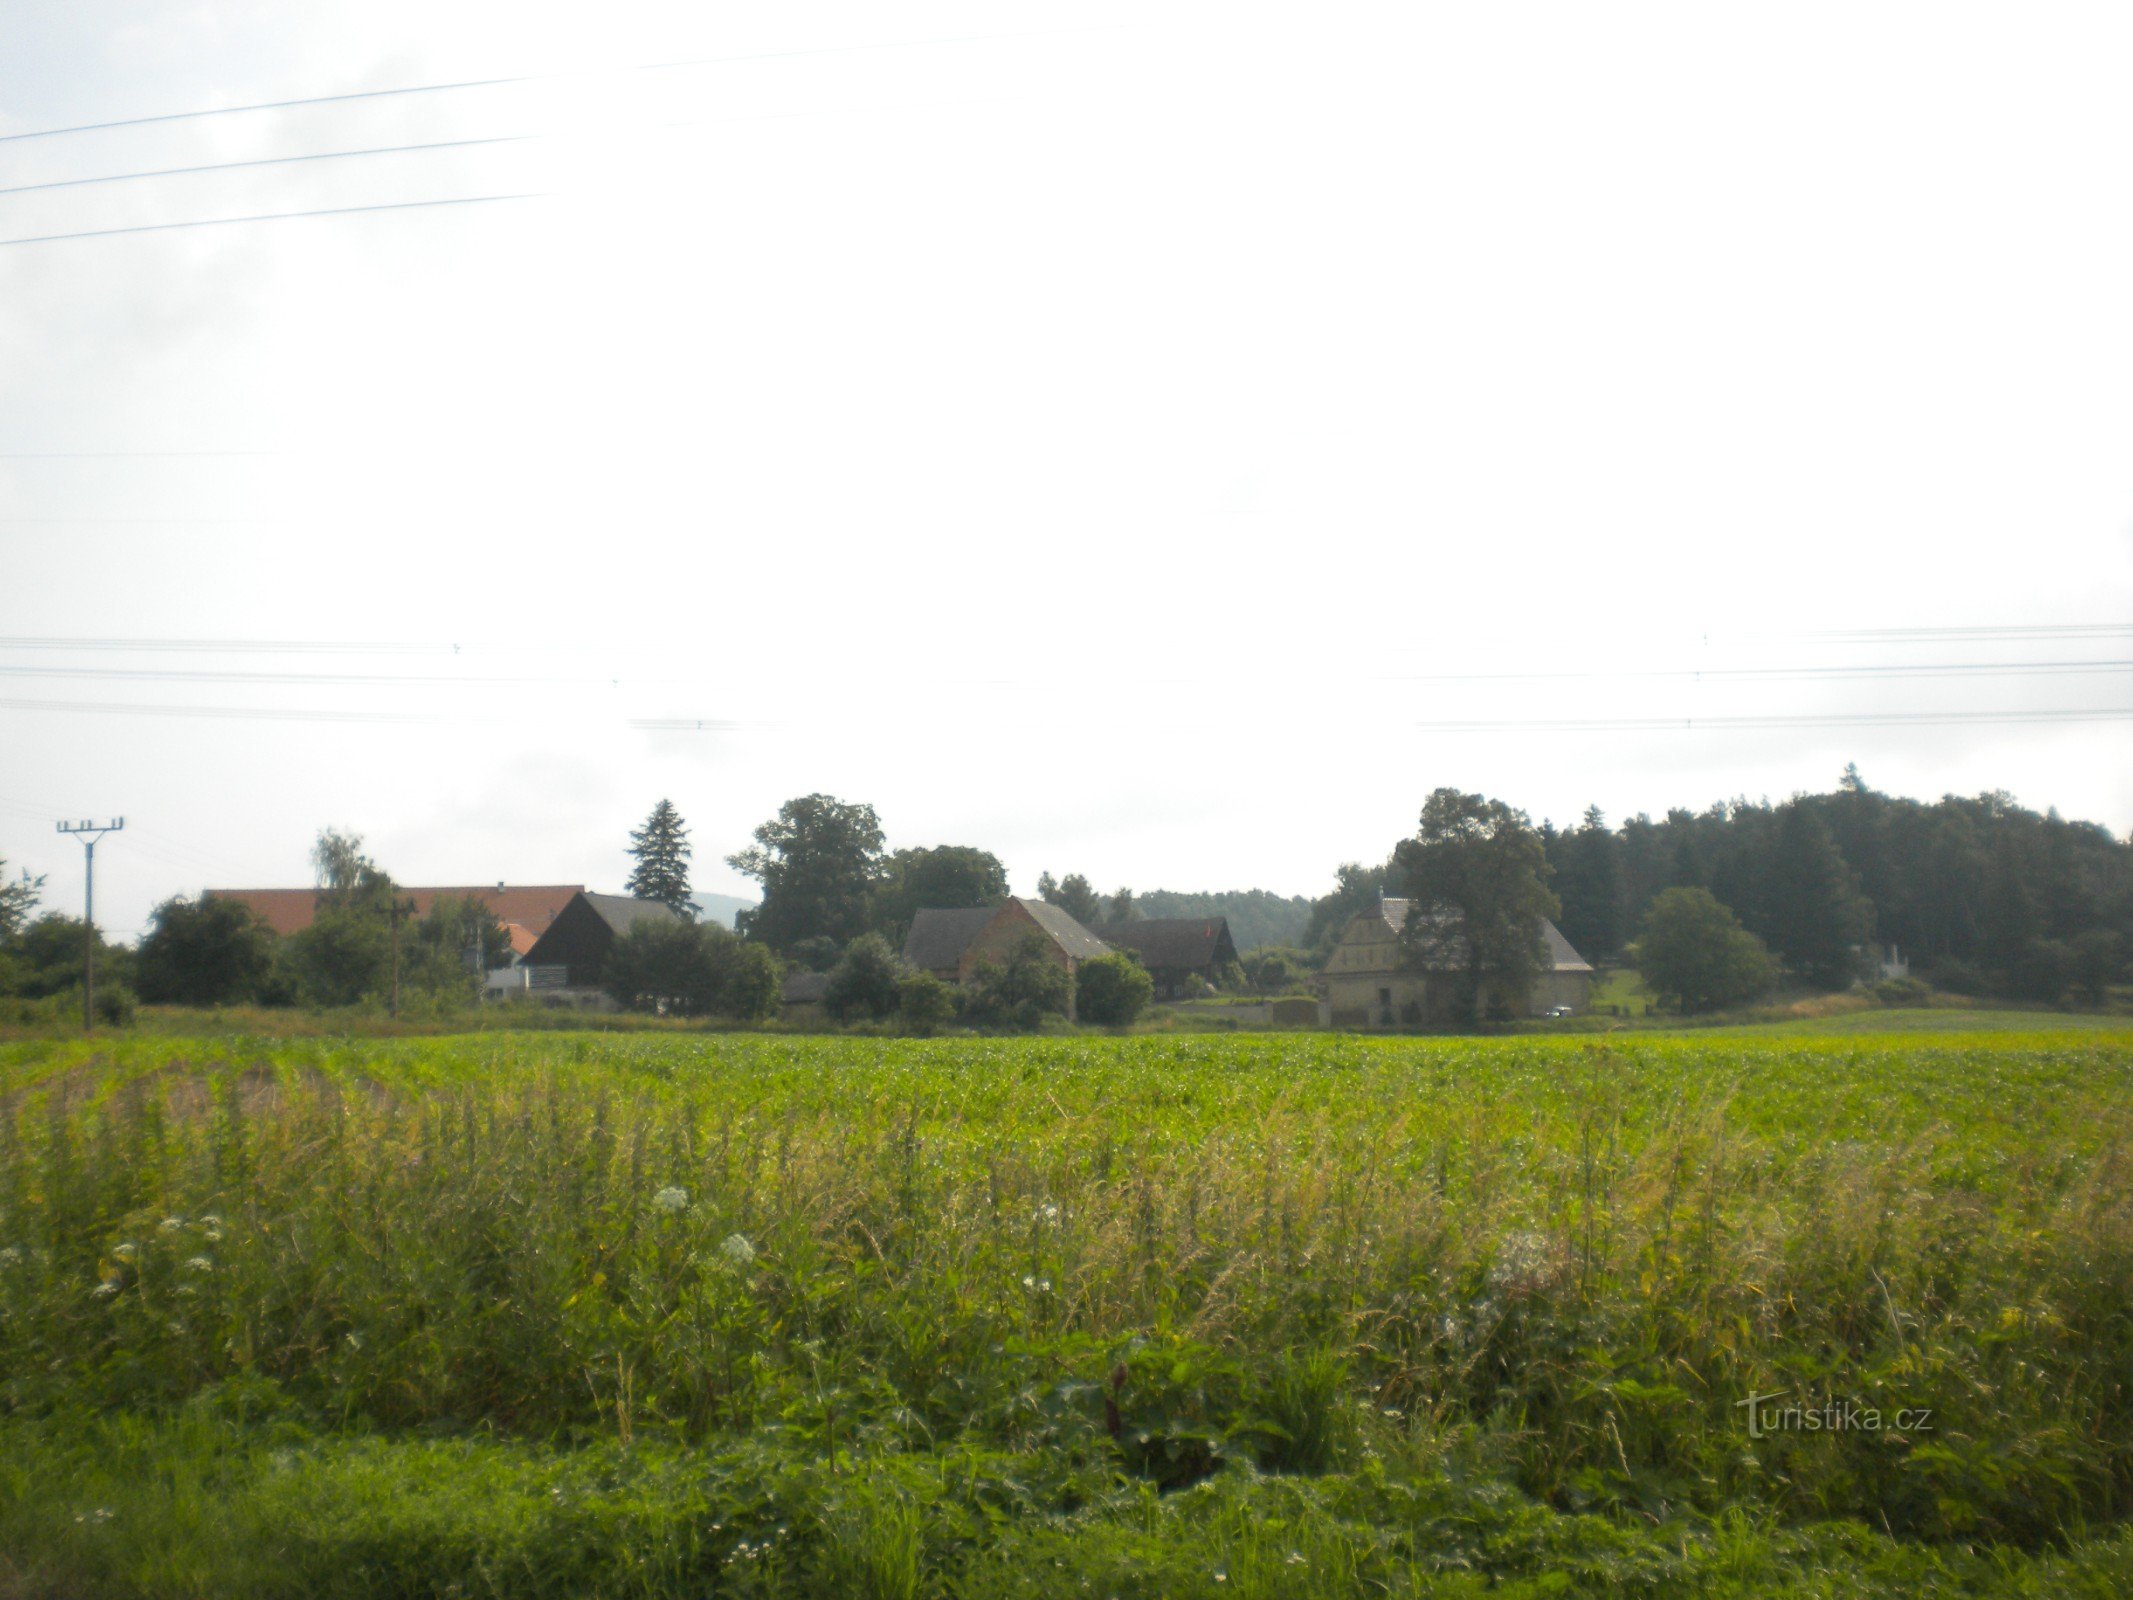 Skalka landsby